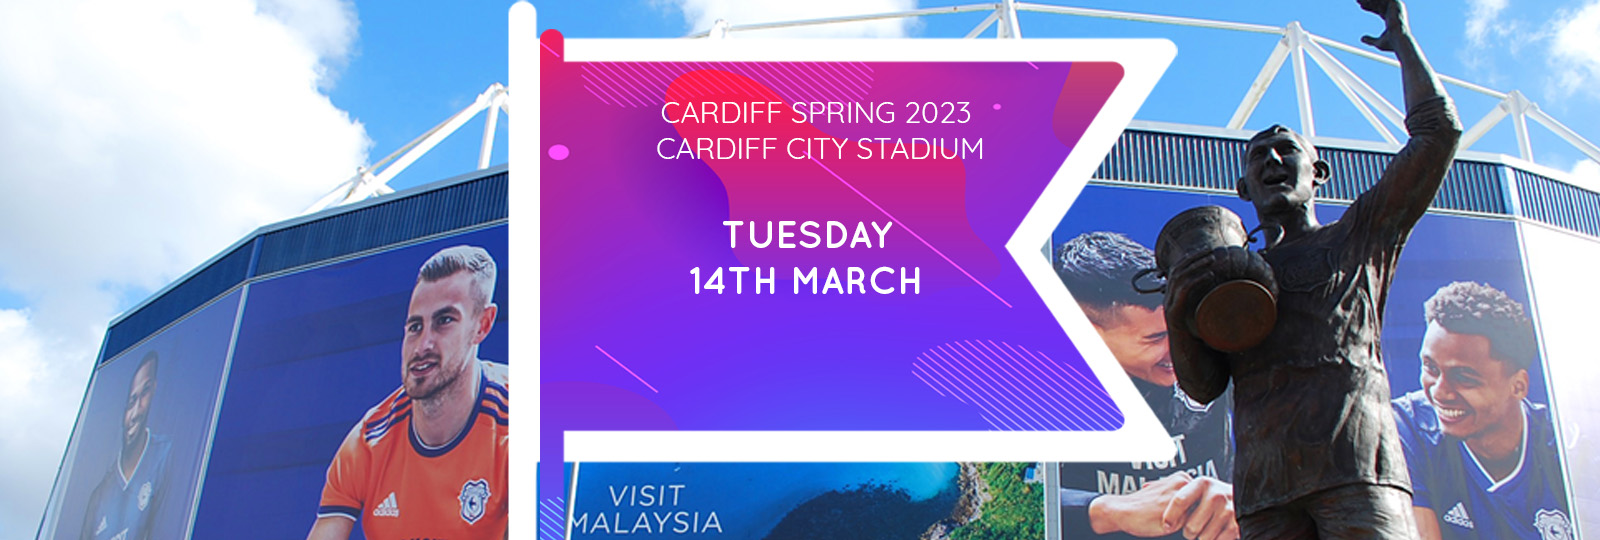 Cardiff Spring 2023 Fair